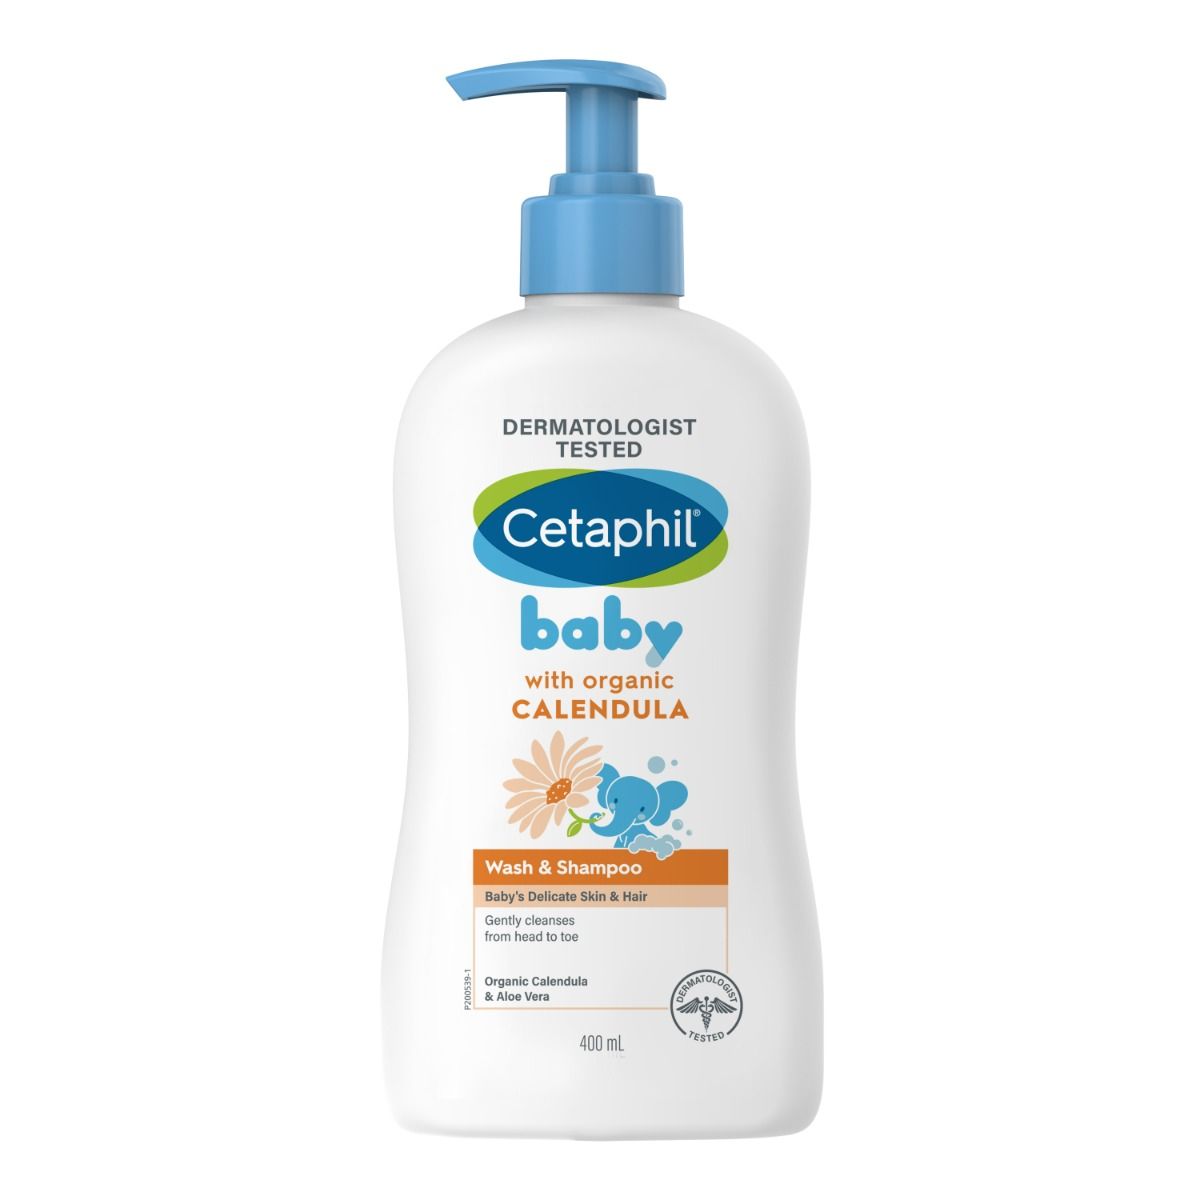 Buy Cetaphil Baby Wash & Shampoo with Organic Calendula, 400 ml Online